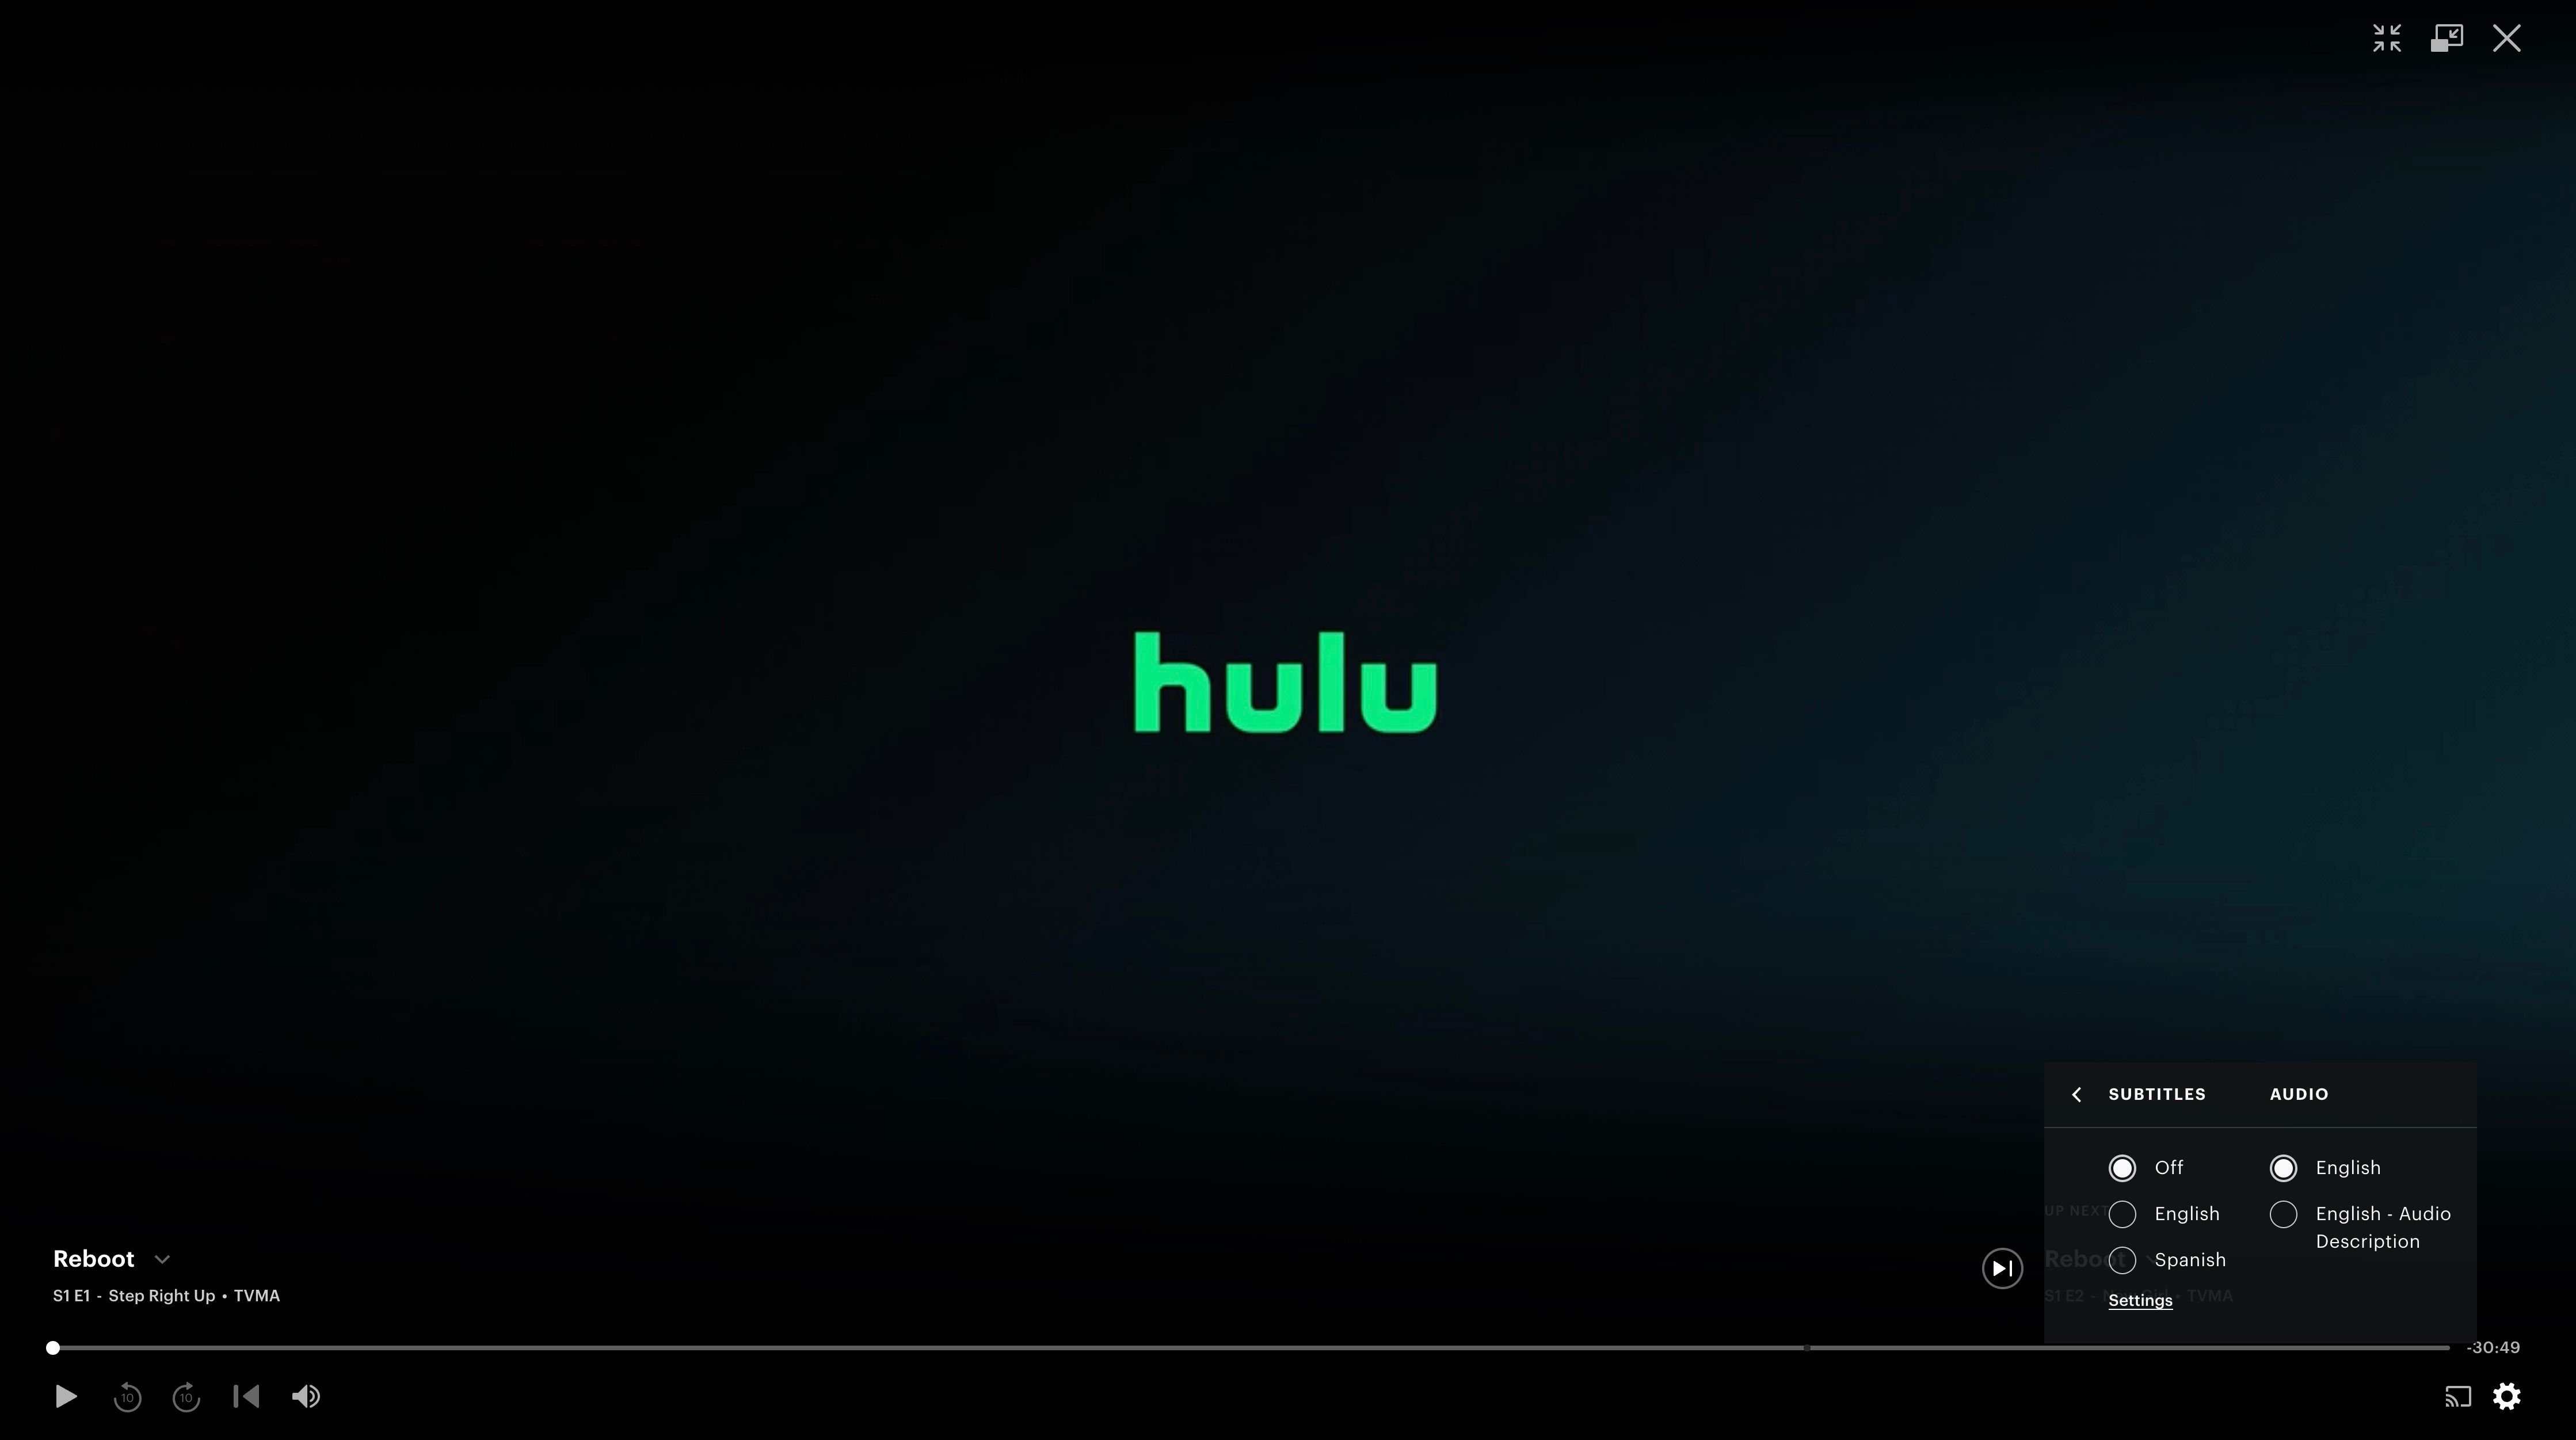 Hulu Audio Description Settings with English selected